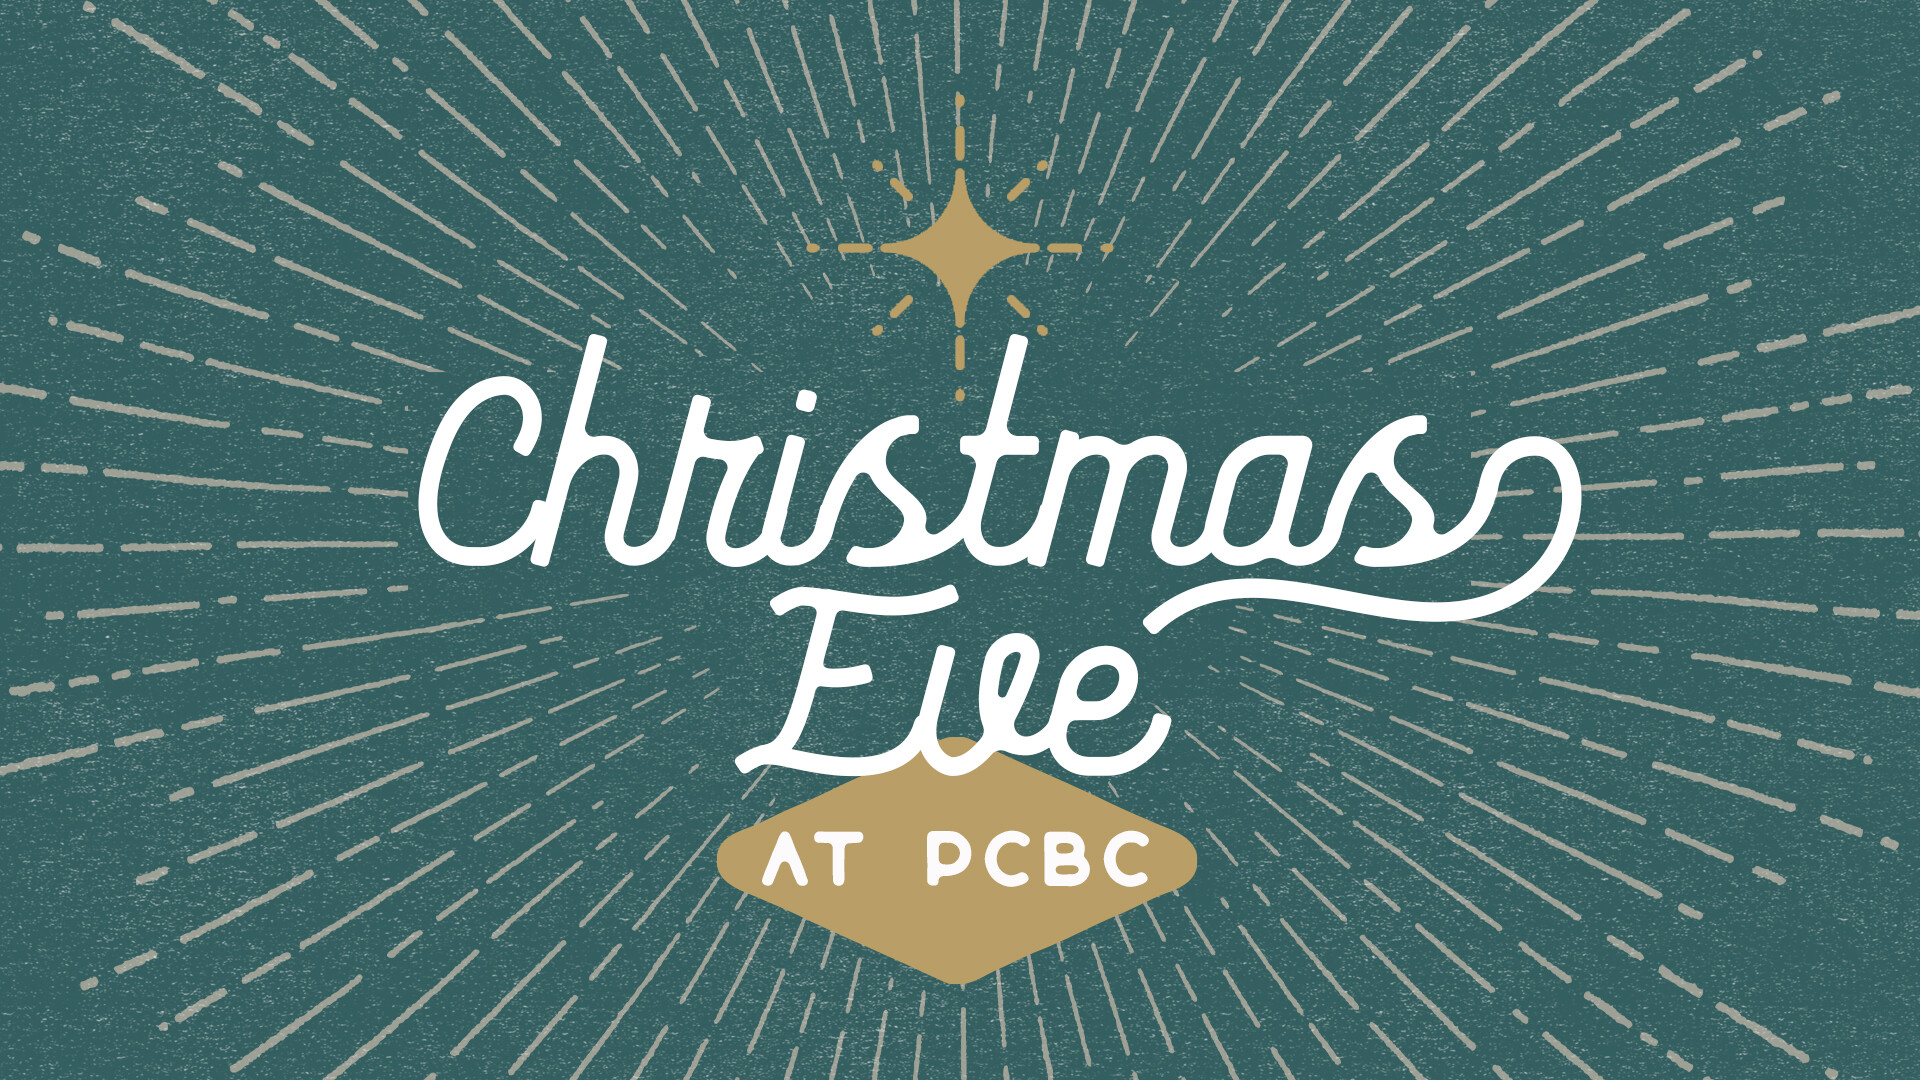 Christmas Eve Services at PCBC - Dec 24 3pm